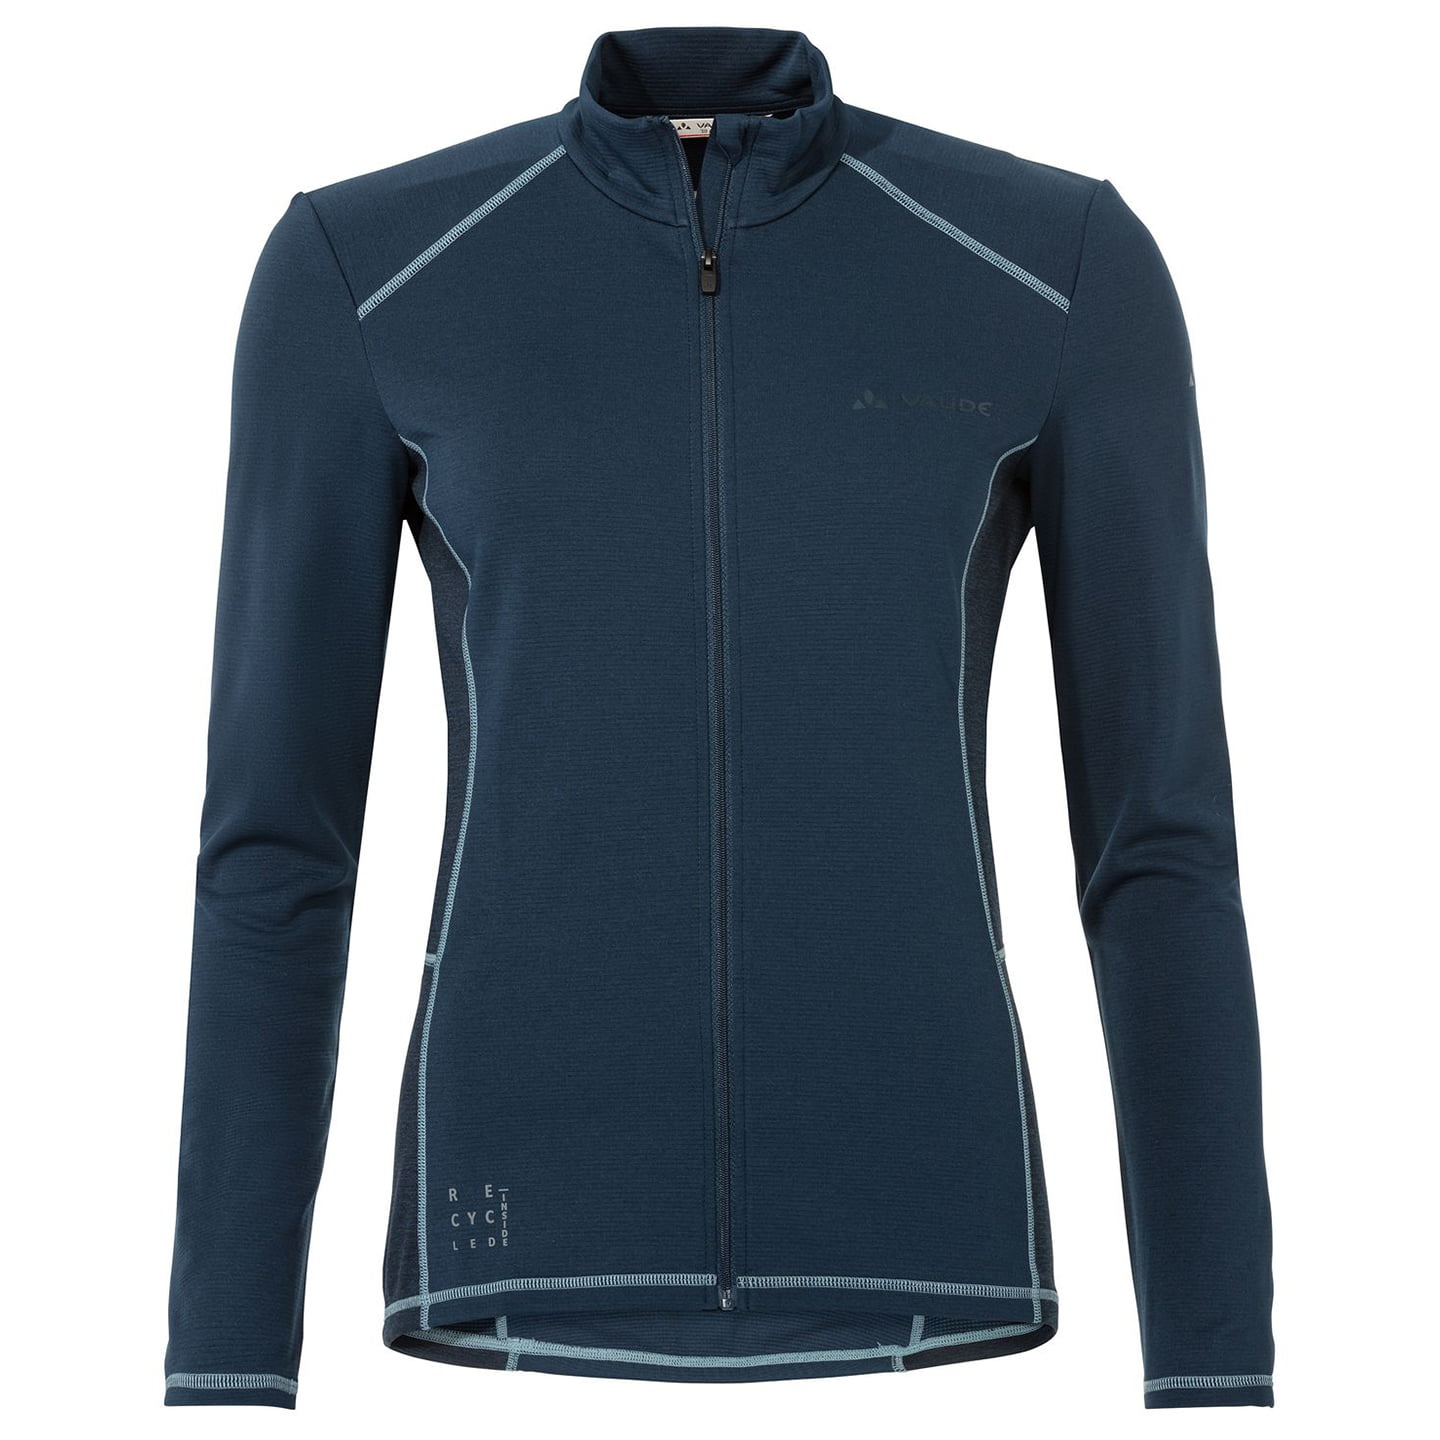 VAUDE Matera Women’s Long Sleeve Jersey, size 40, Cycle shirt, Bike clothing